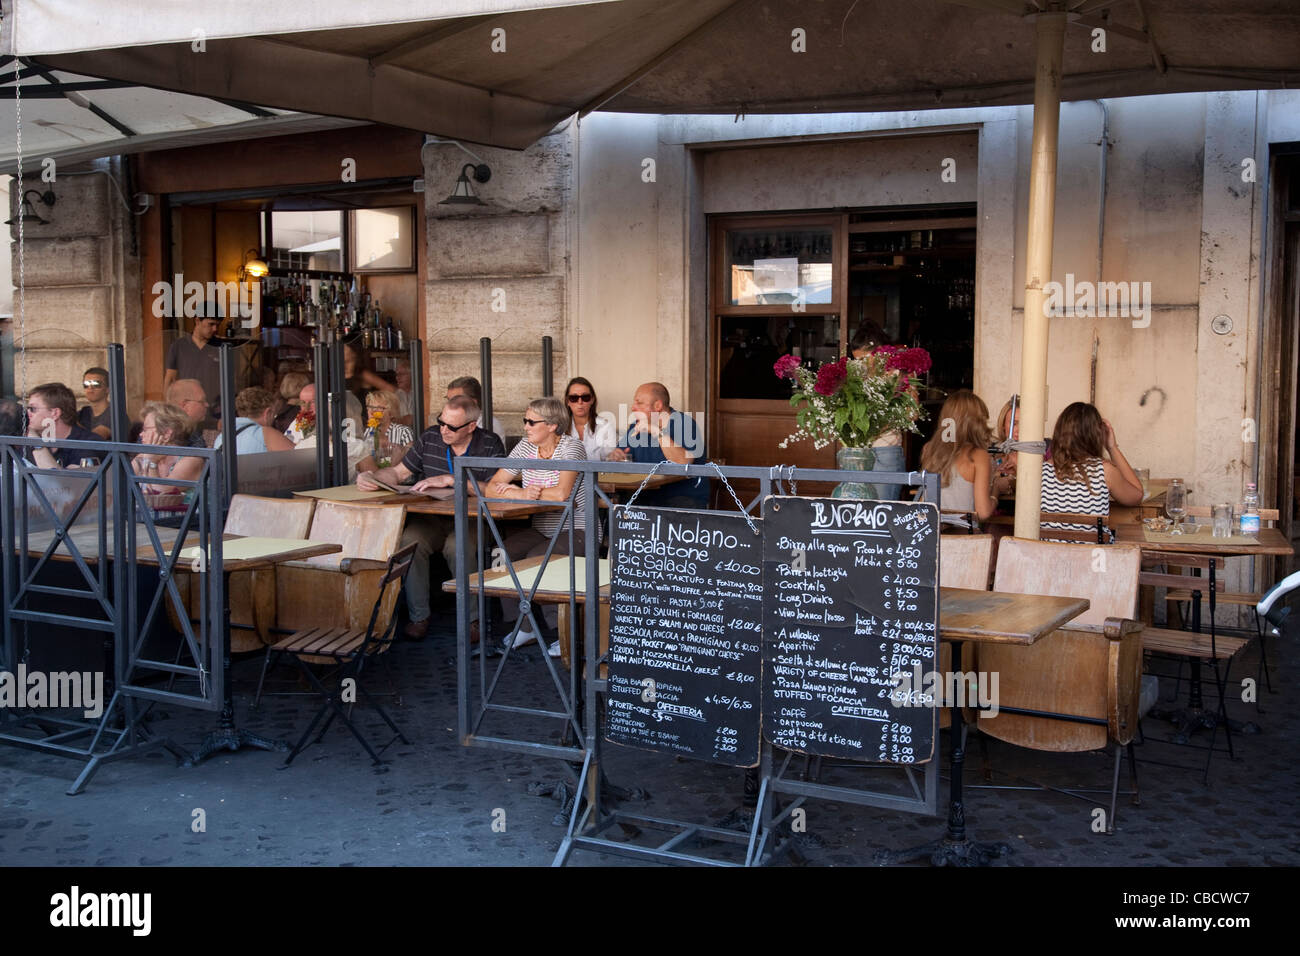 Campo de' fiori restaurant hi-res stock photography and images - Alamy